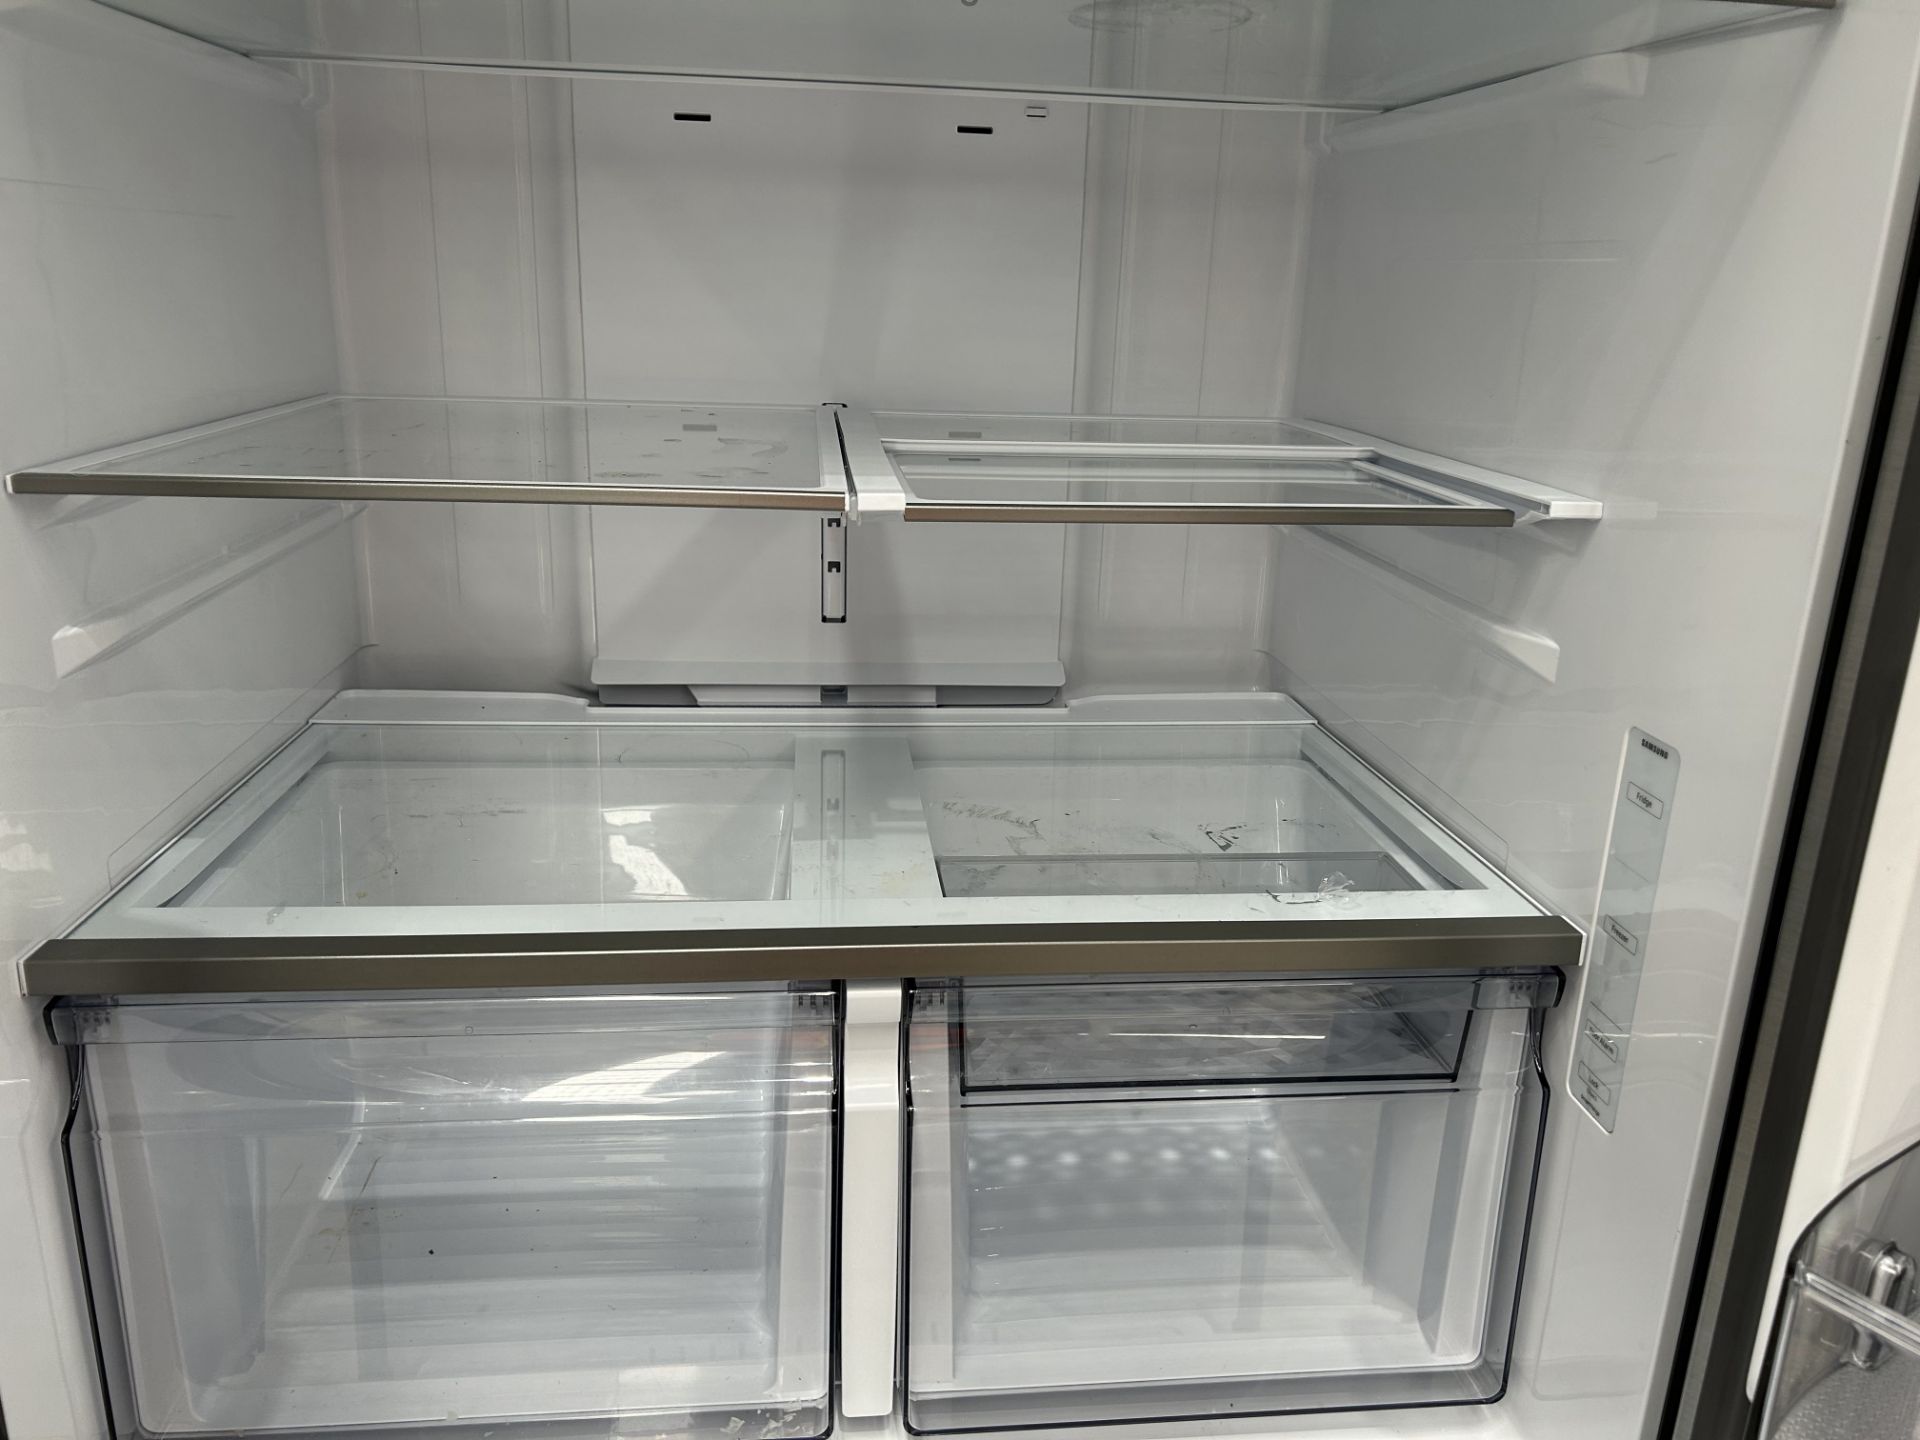 1 refrigerador Marca SAMSUNG, Modelo FR32CG5A10S9E, Color GRIS (No se asegura su funcionamiento, fa - Image 6 of 7